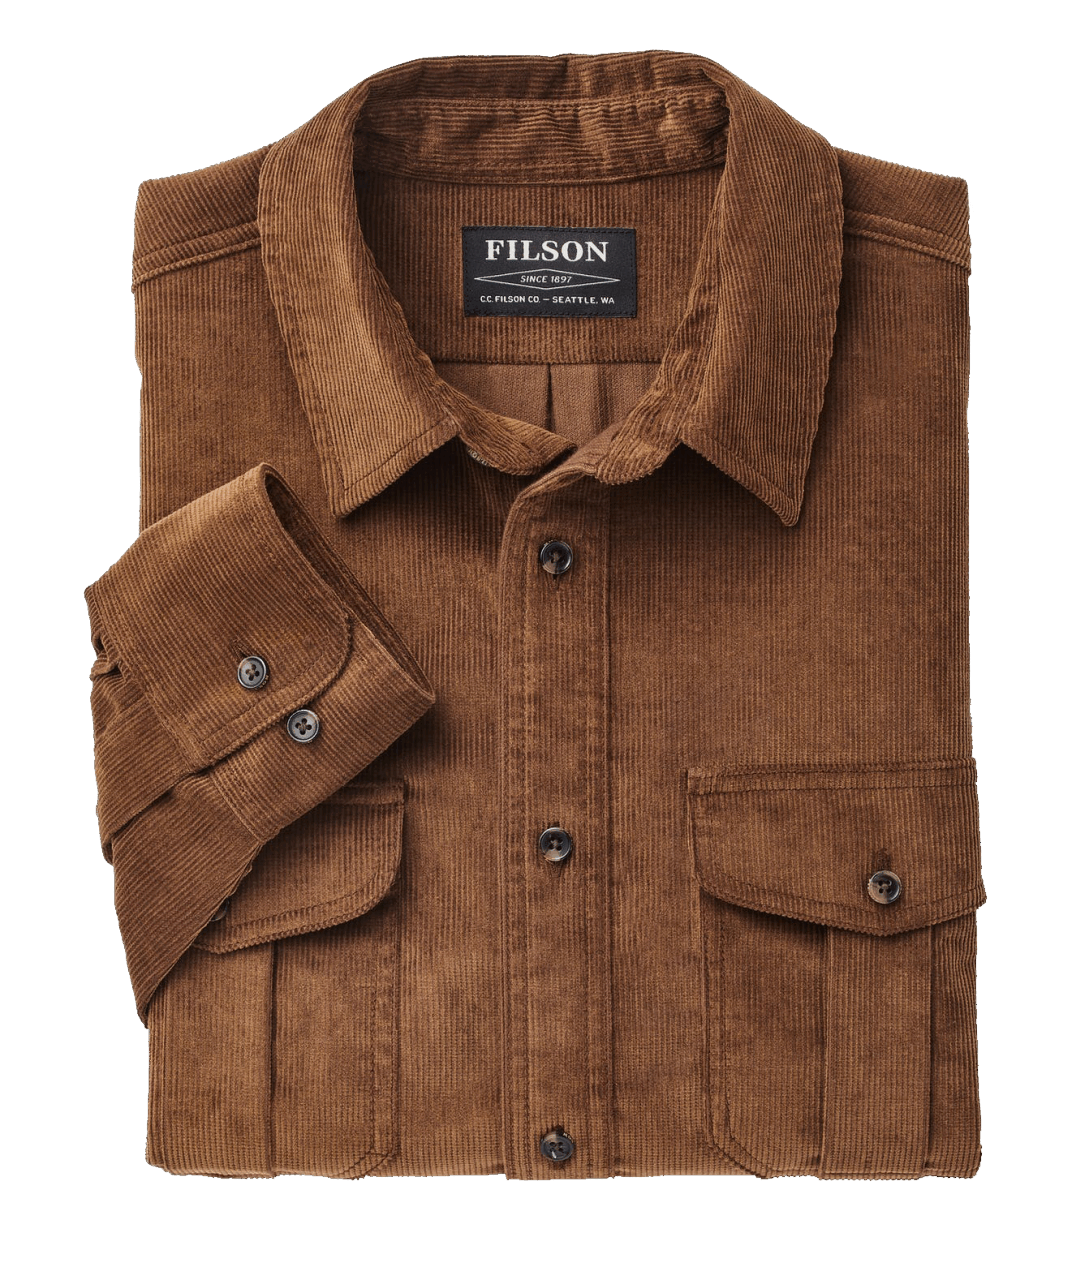 Filson Wale Corduroy Shirt brown